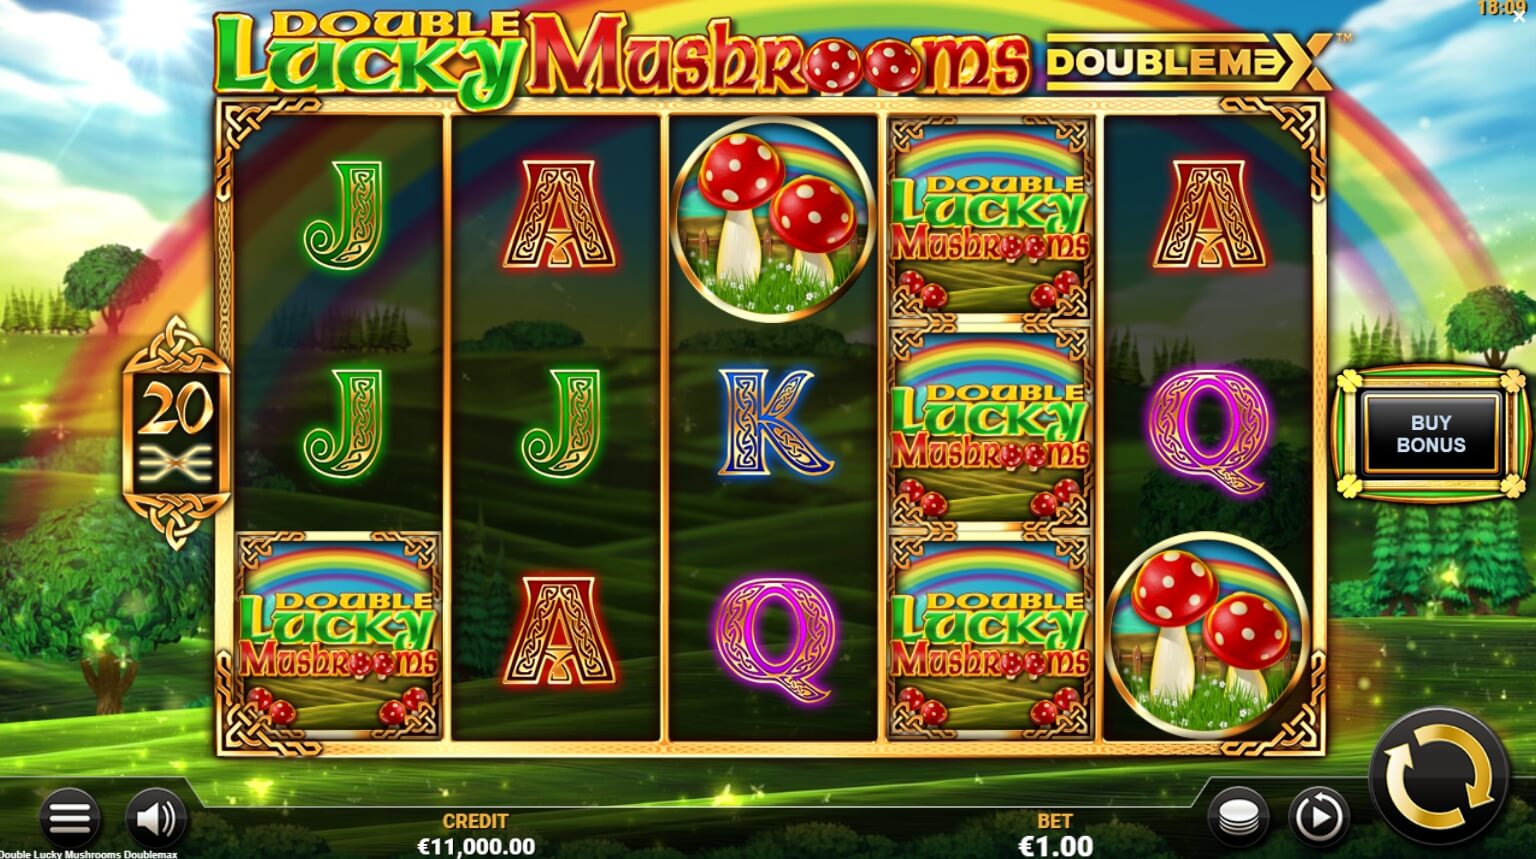 Double Lucky Mushrooms DoubleMax Yggdrasil joker slot